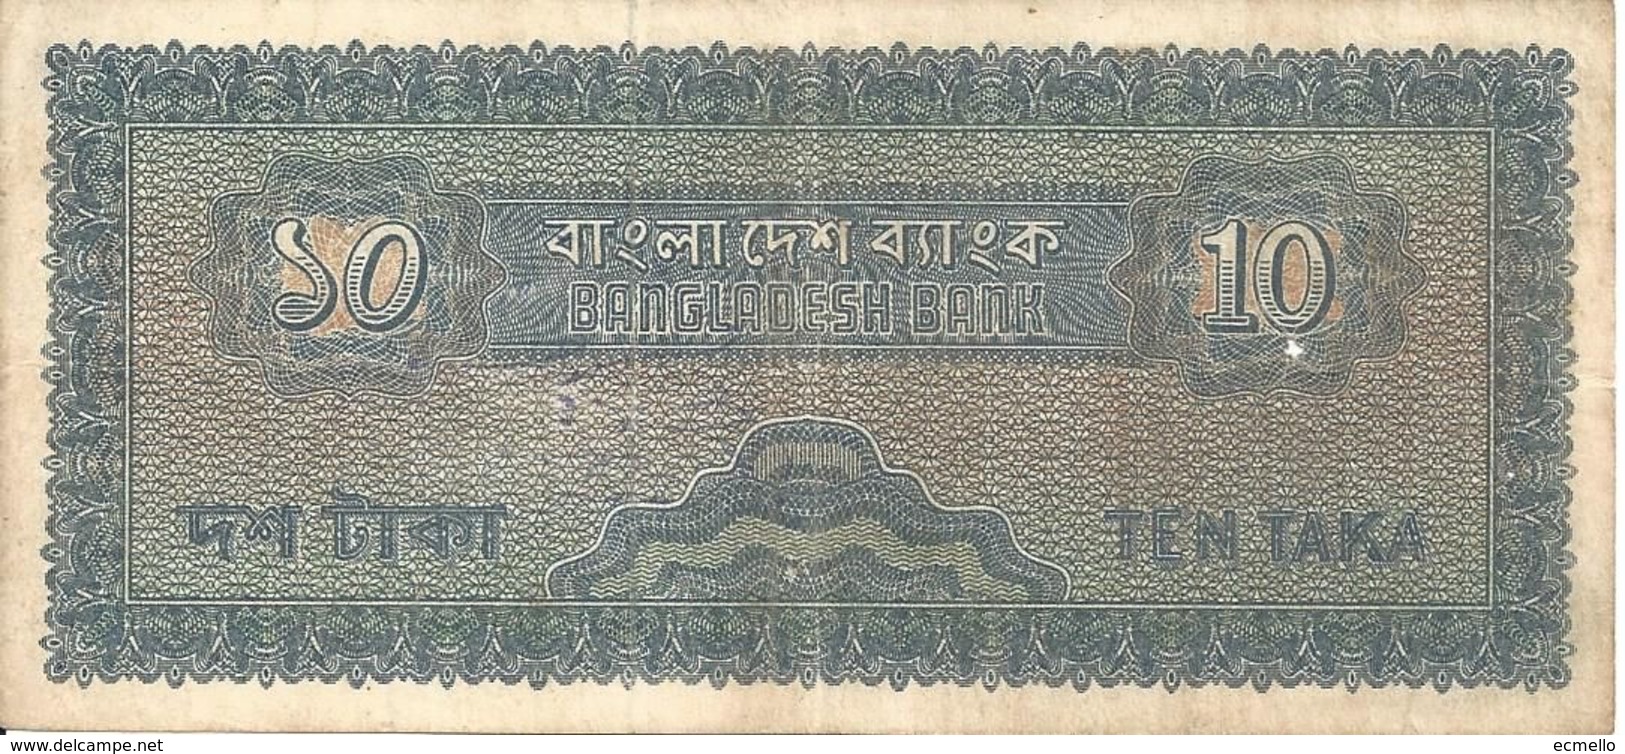 BANGLADESH P0810 TAKA 1972 MAP SERIES SK. MUJIBUR RAHMAN RARE BANK NOTE - Bangladesch